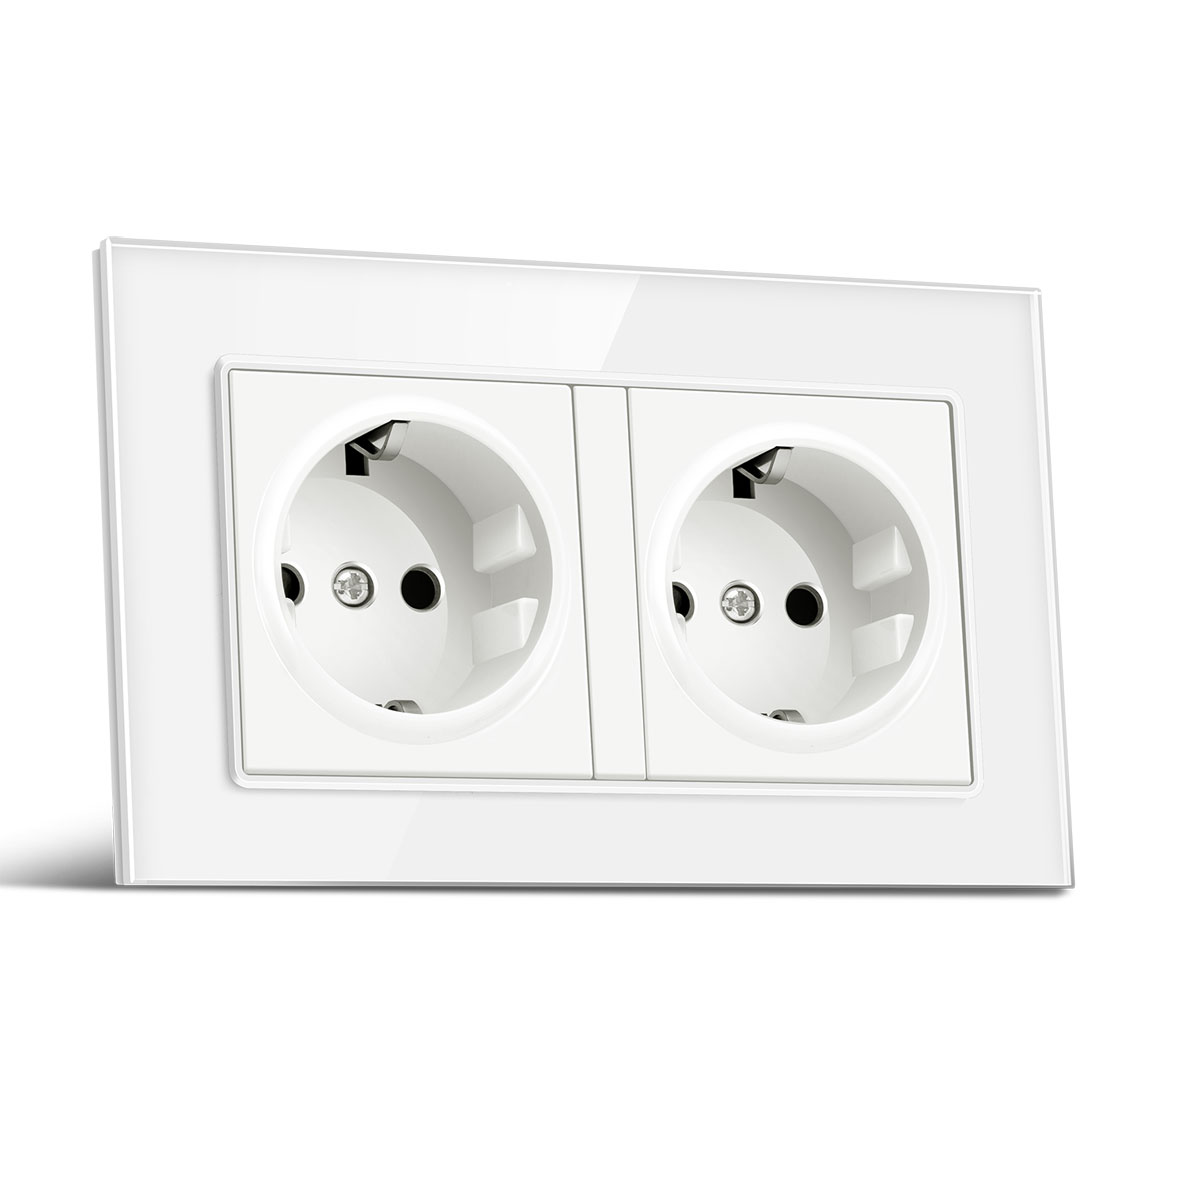 BONDA-Socket-Switch-8686-PC-Glass-Panel-Eu-German-France-Plug-Wall-Socket-Smart-Home-Series-Switch-1736000-6